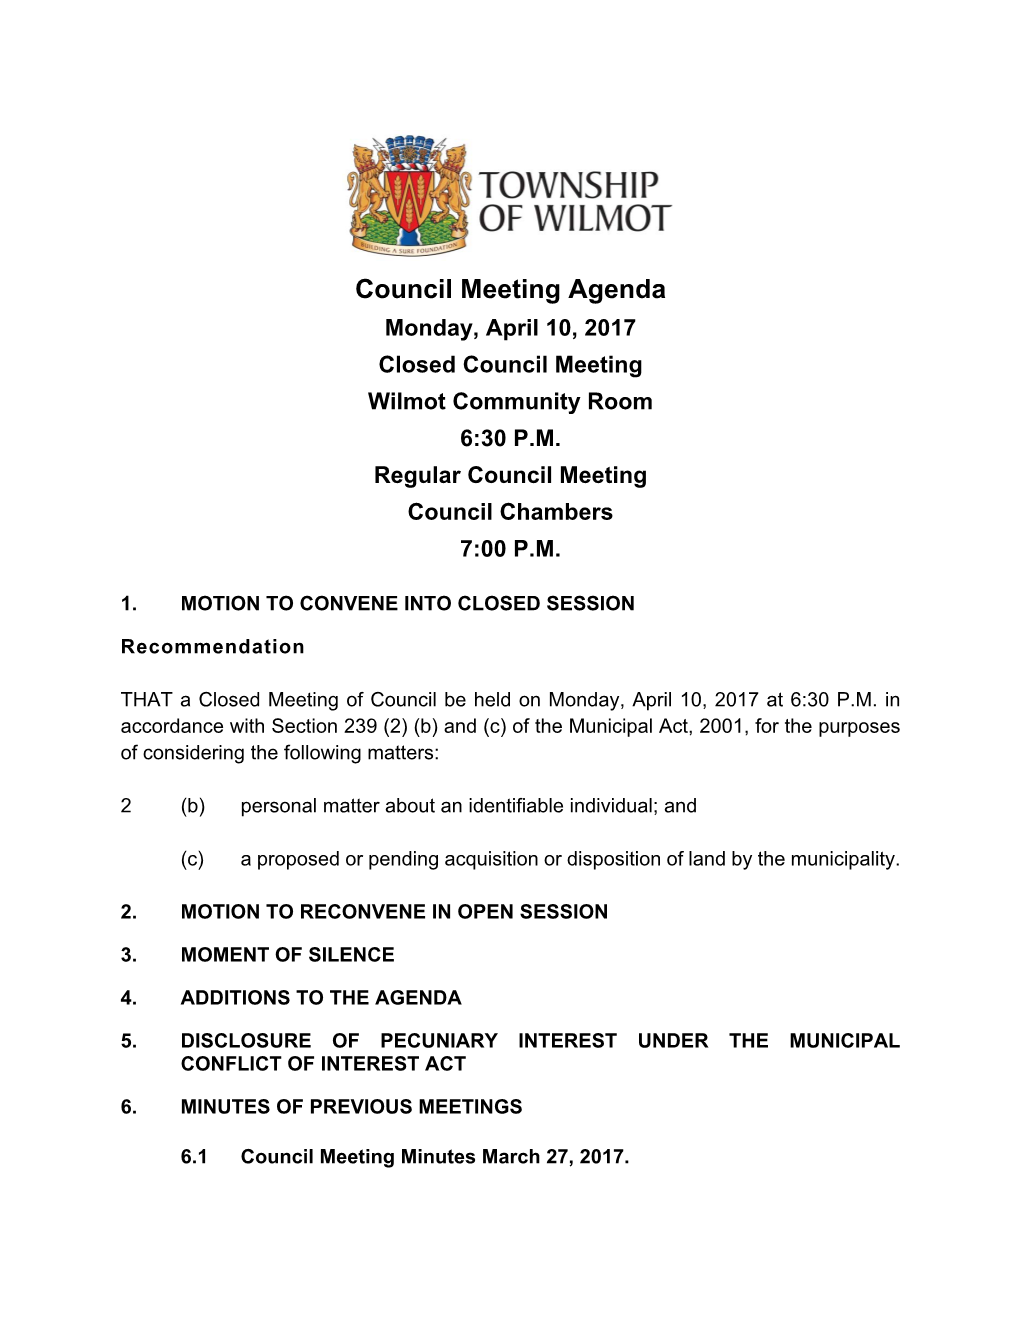 Council Meeting Agenda Monday, April 10, 2017 Closed Council Meeting Wilmot Community Room 6:30 P.M